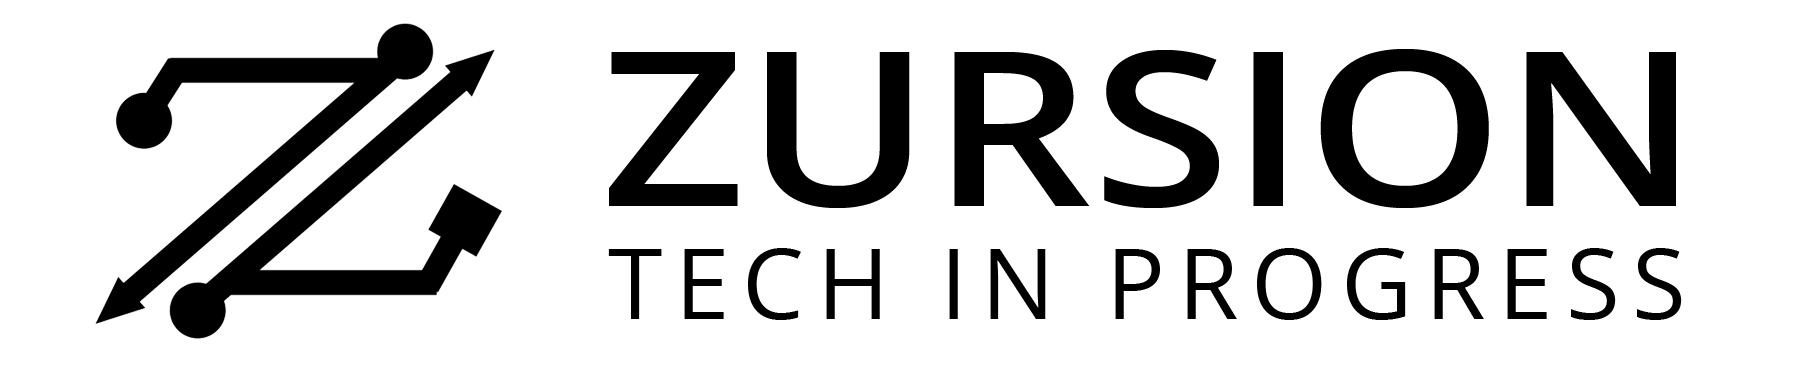 Zursion Tech in Progress Logo